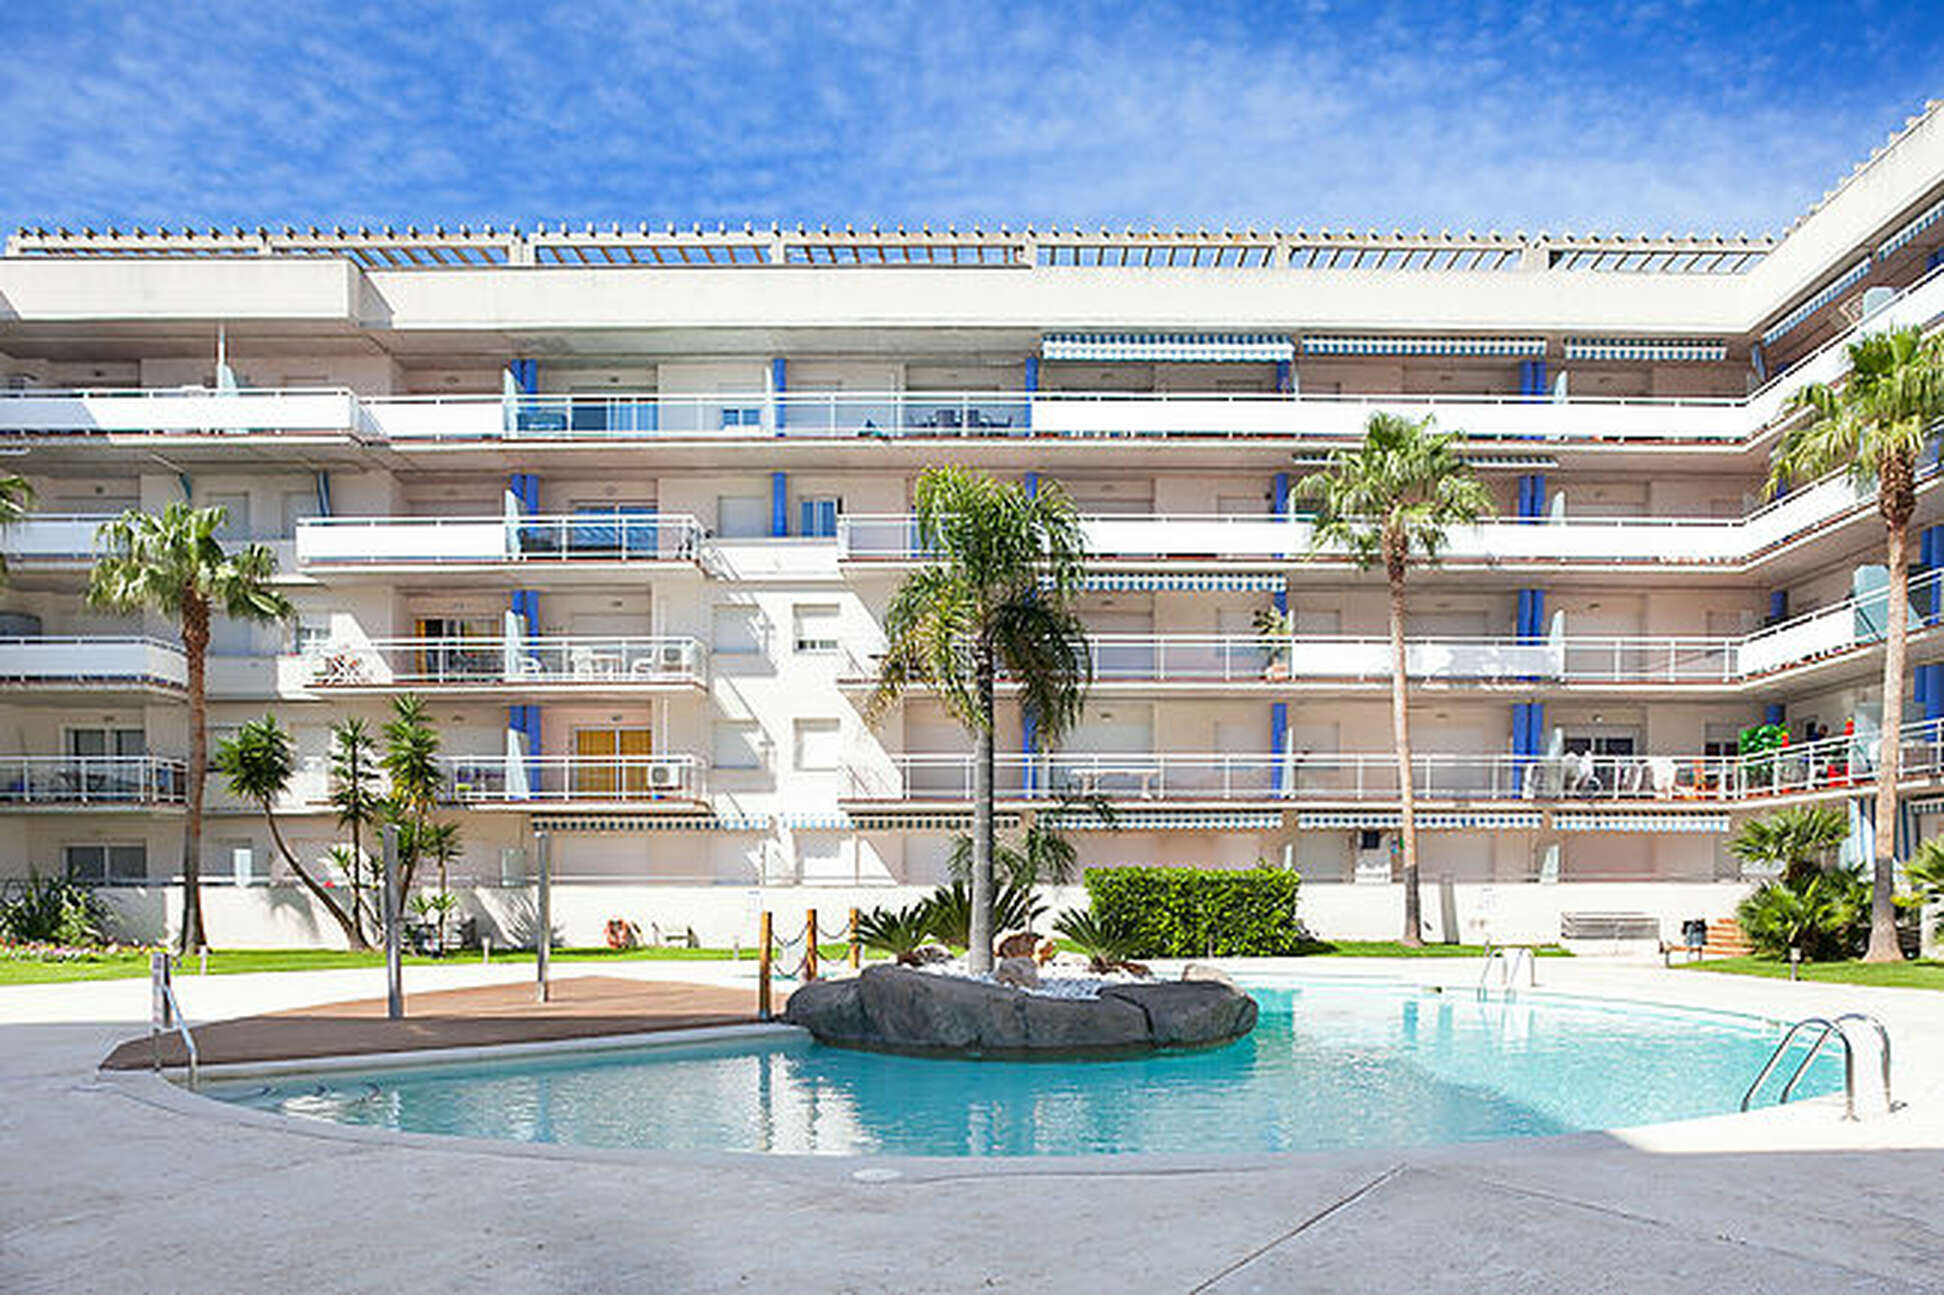 Bonito apartamento con terraza sur con piscina comunitaria